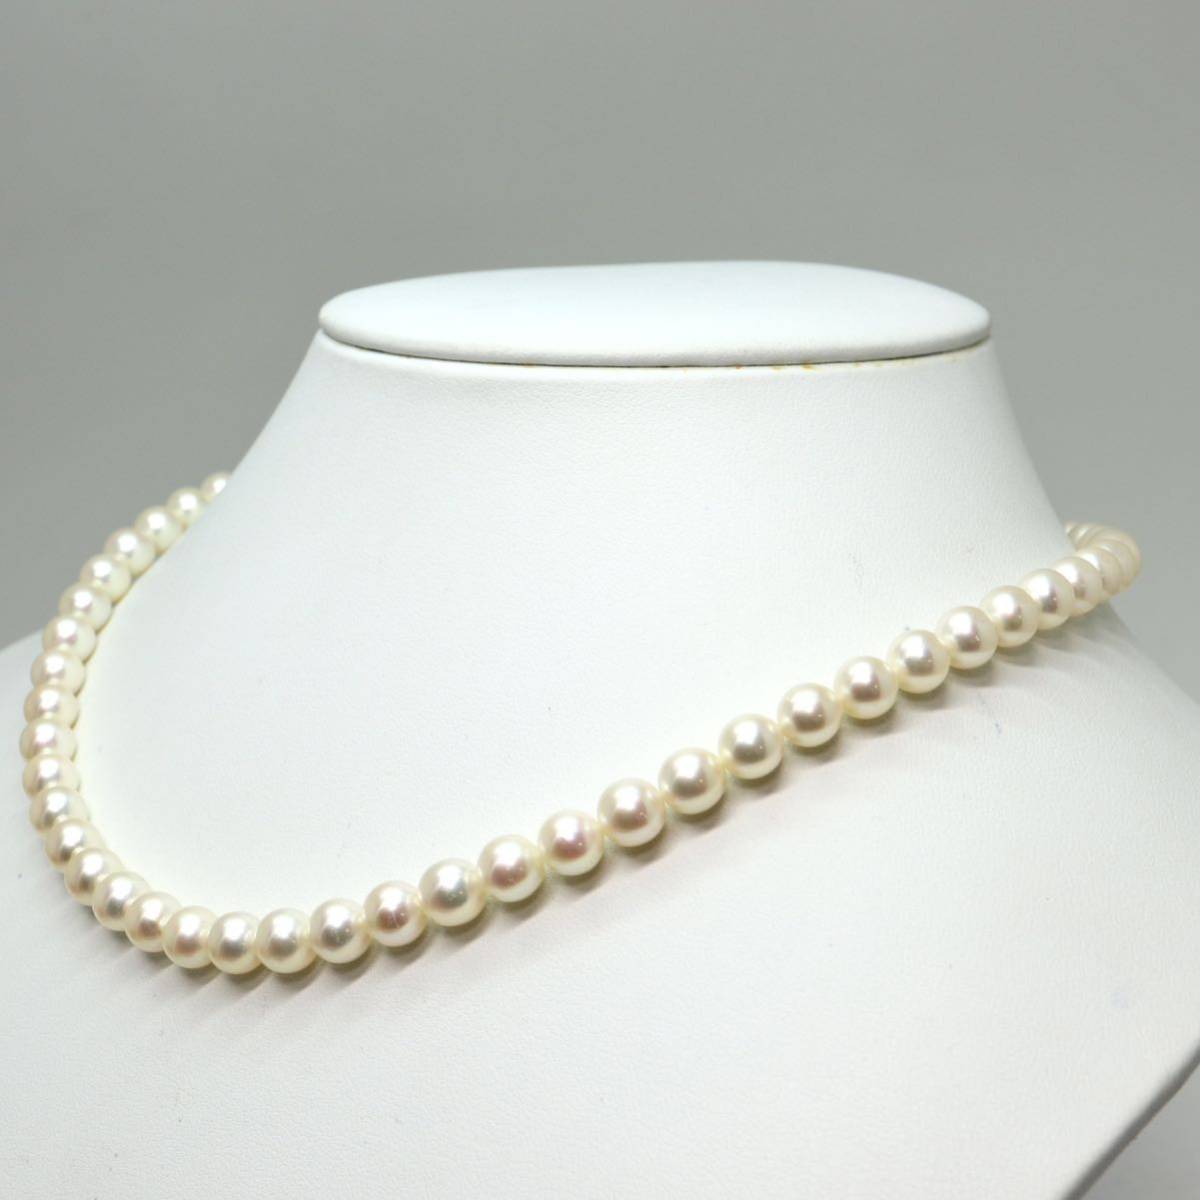 TASAKI(田崎真珠)《アコヤ本真珠ネックレス》M 6.5-7.0mm珠 29.6g 約42cm pearl necklace ジュエリー jewelry EA0/EB4_画像3